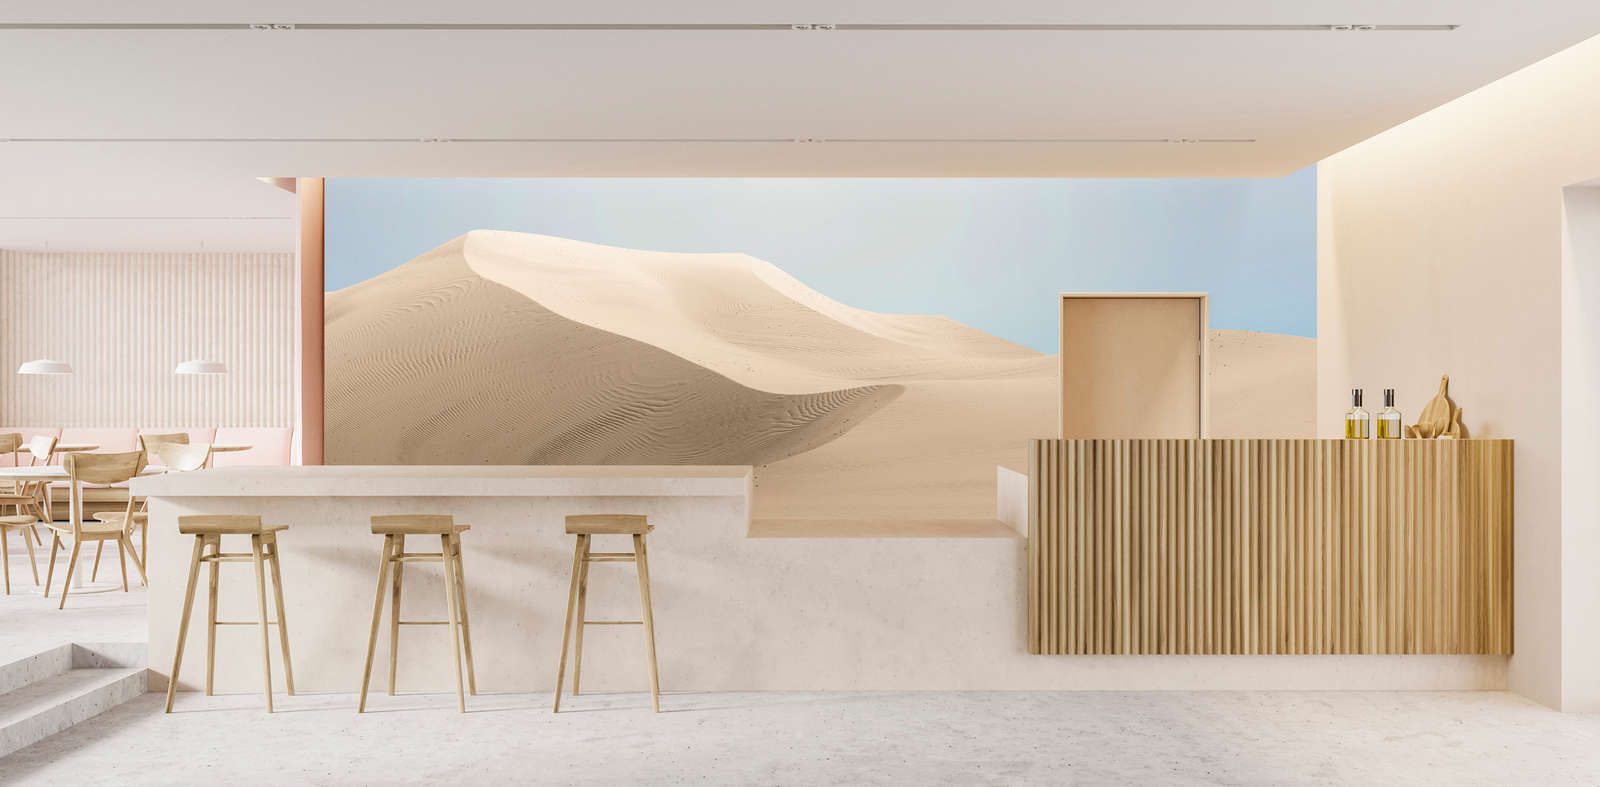             Photo wallpaper »dunes« - pastel-coloured desert landscape - Smooth, slightly shiny premium non-woven fabric
        